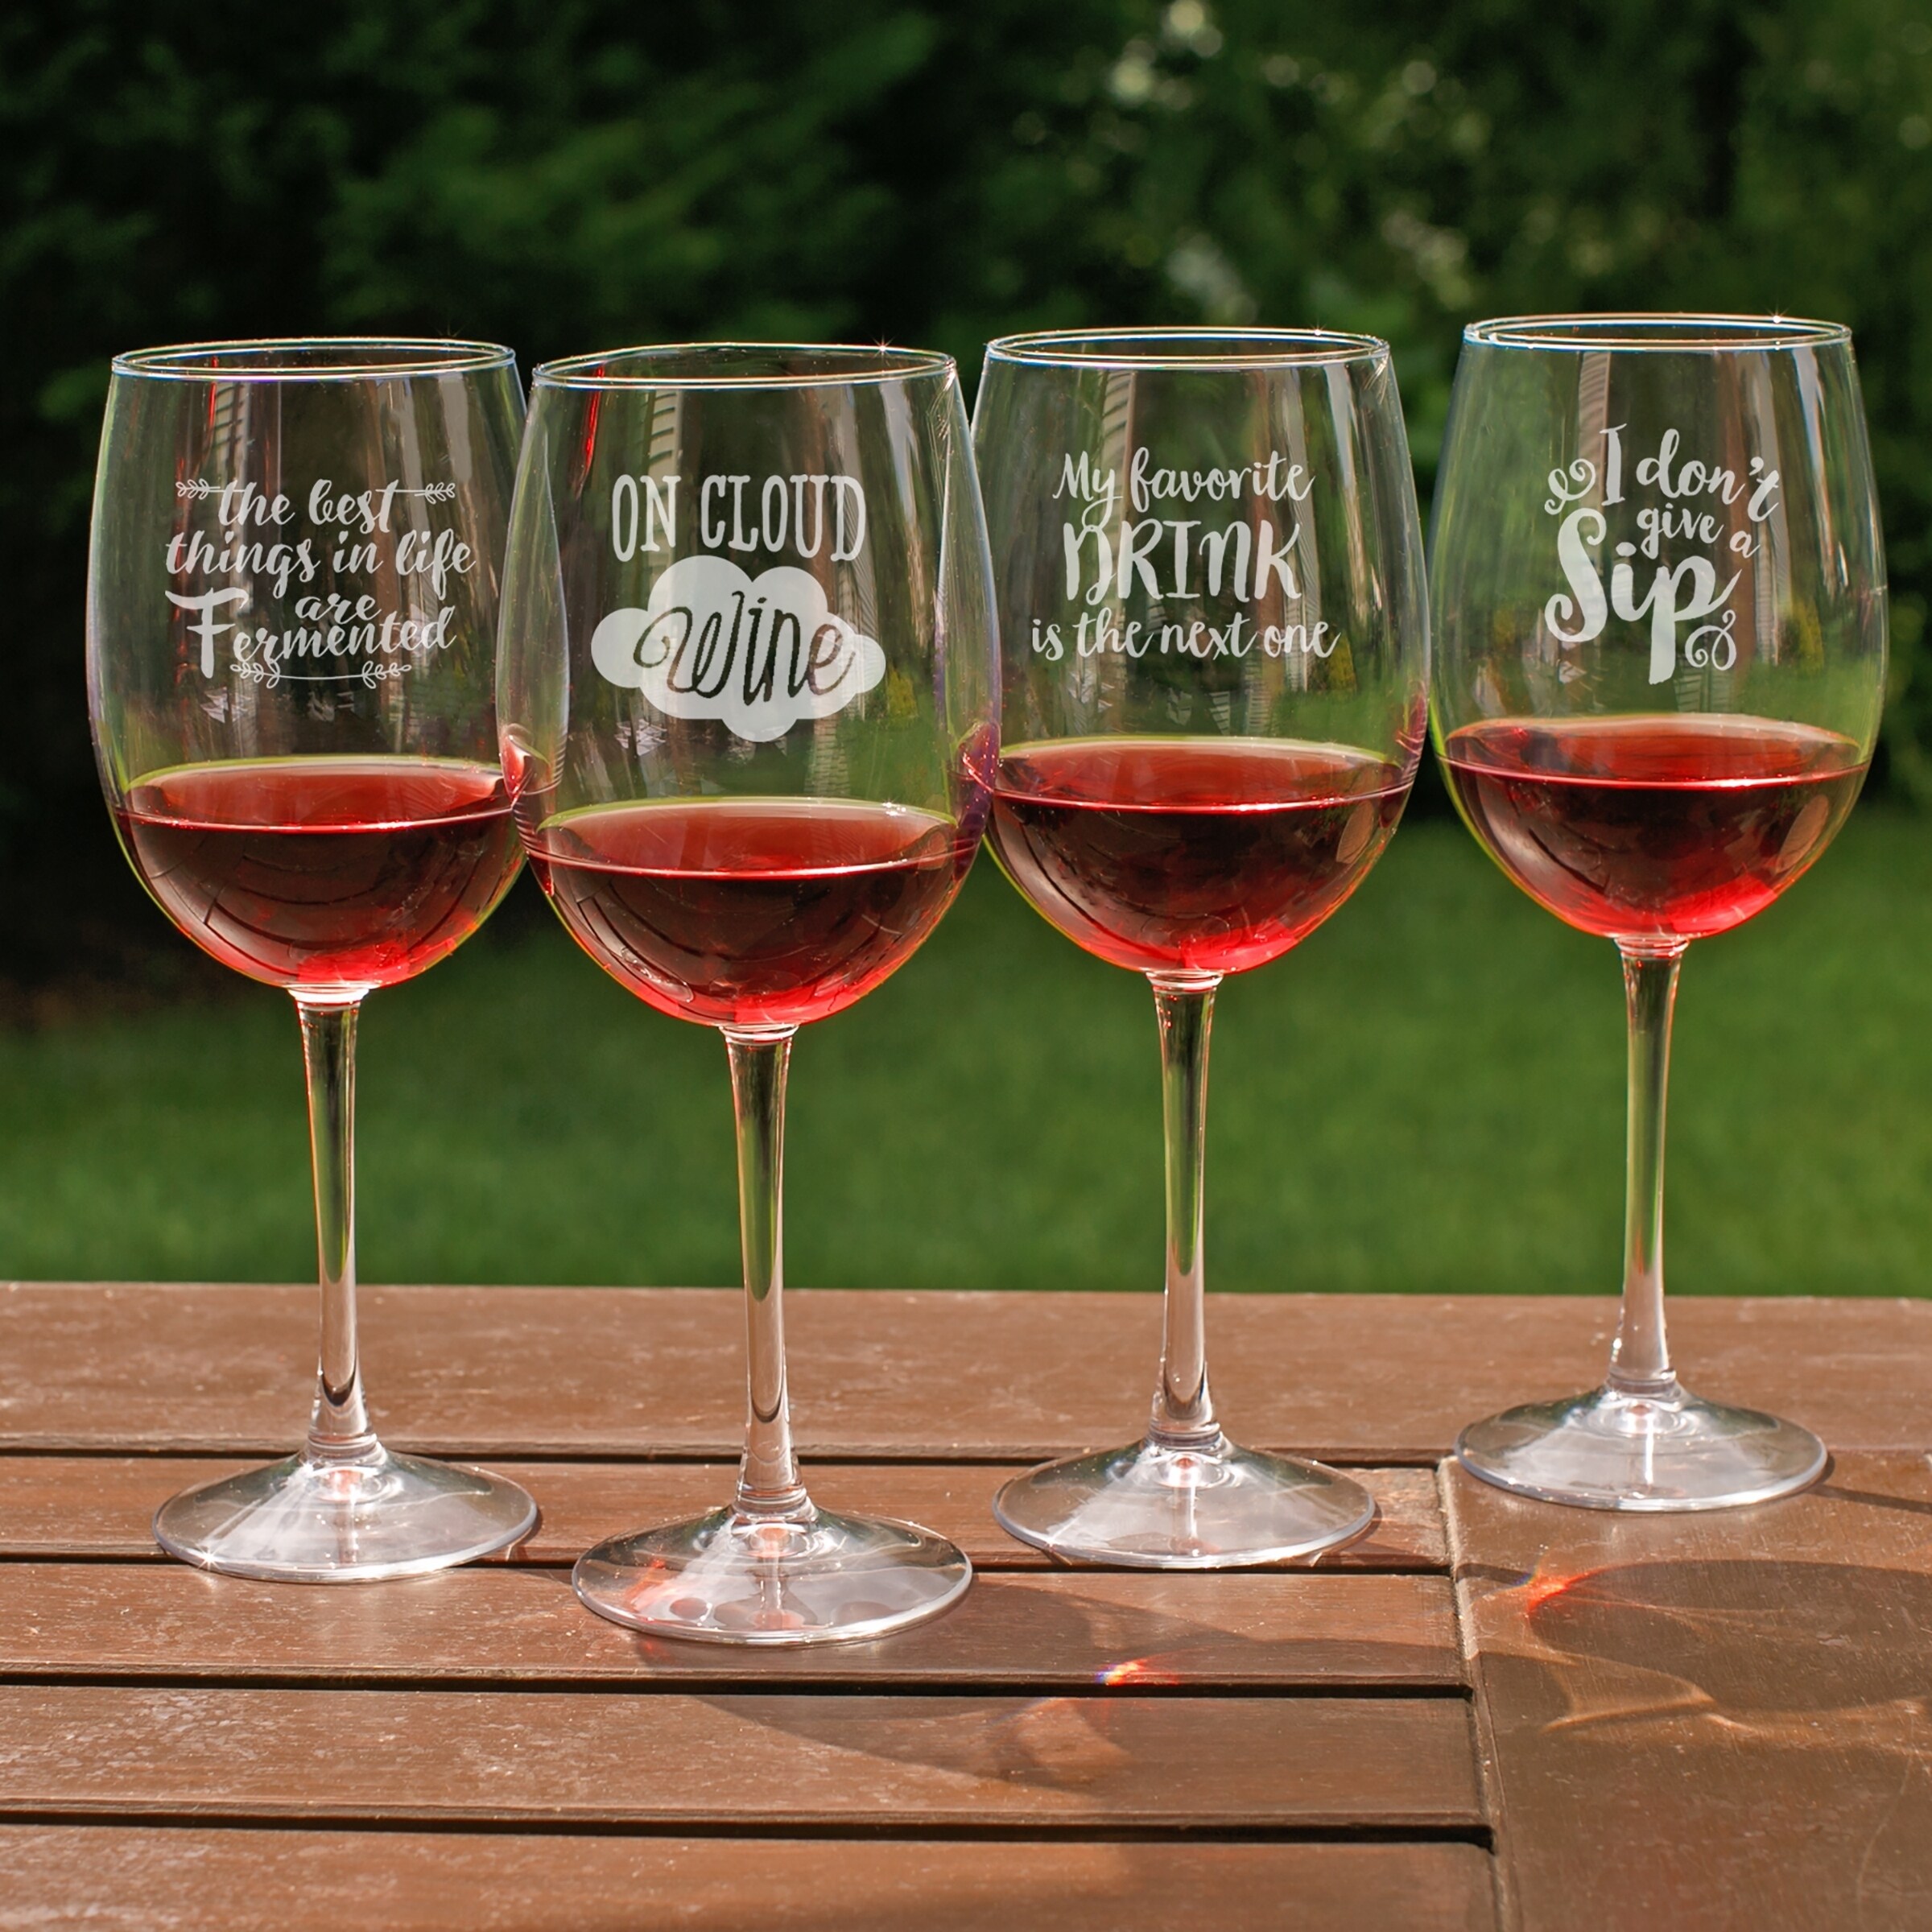 Botanic Garden 19 Ounce Set of 4 Stemless Wine Glasses (Assorted)